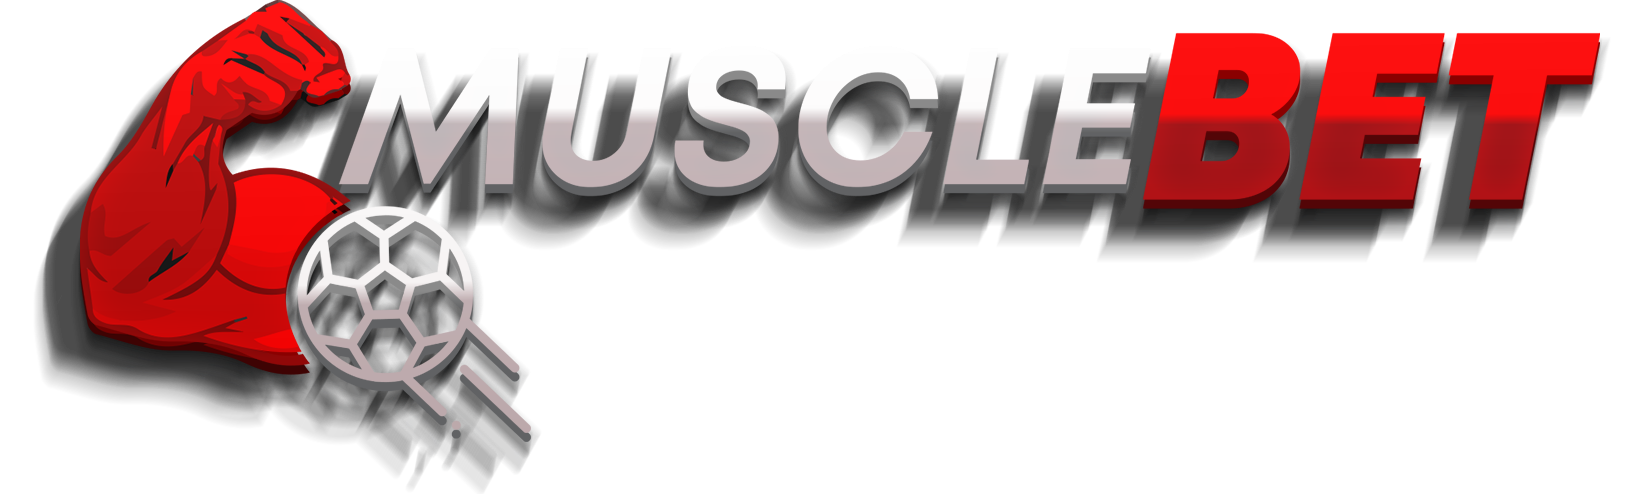 musclebet